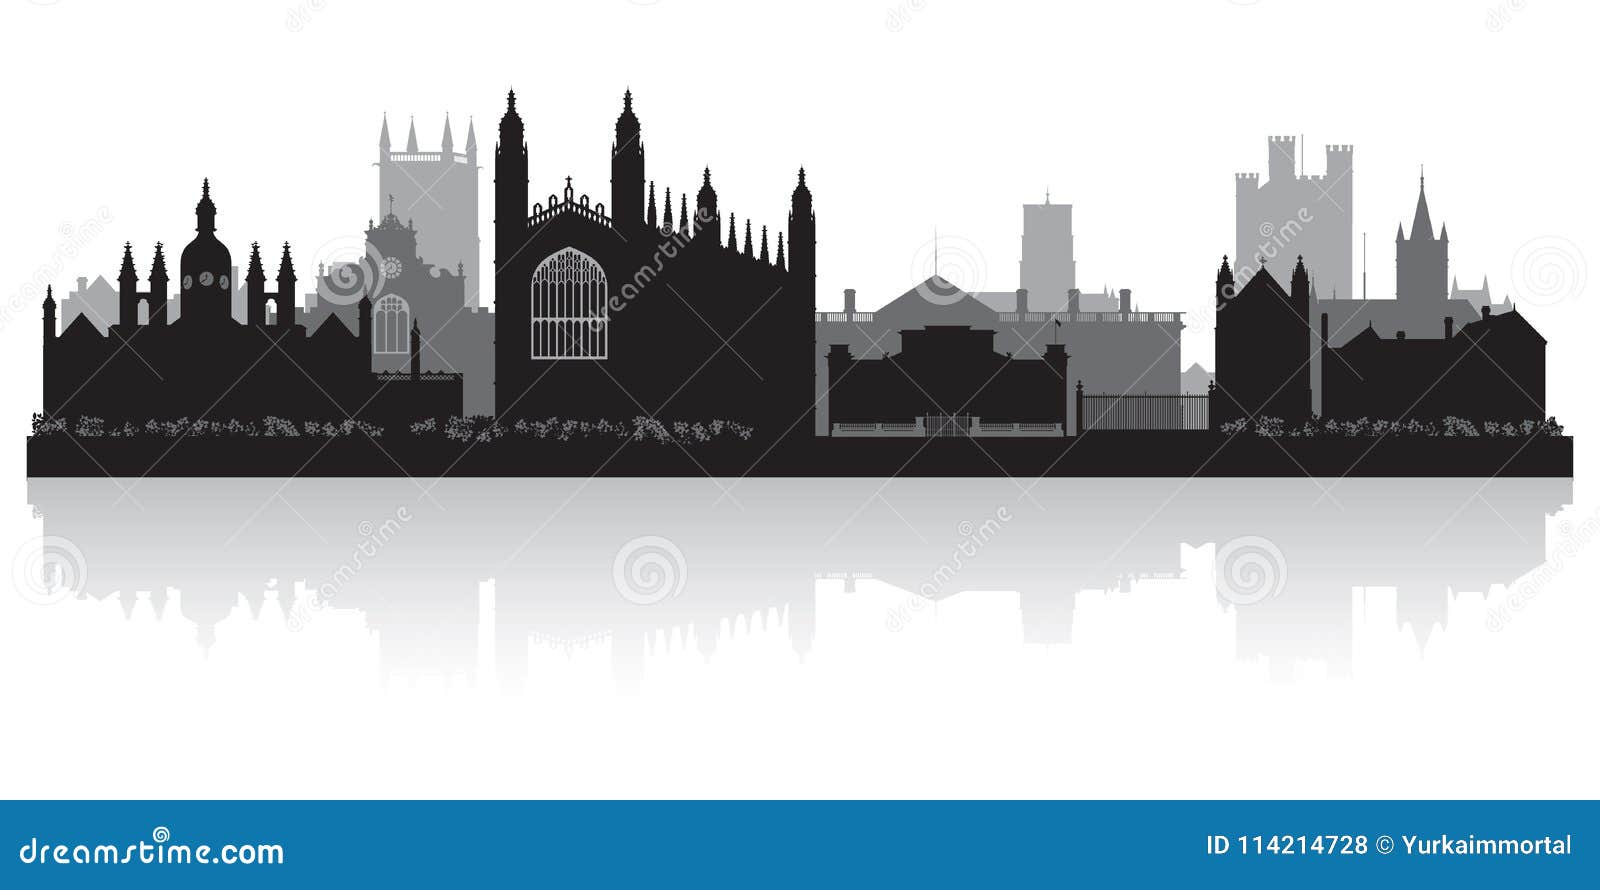 cambridge city skyline silhouette  